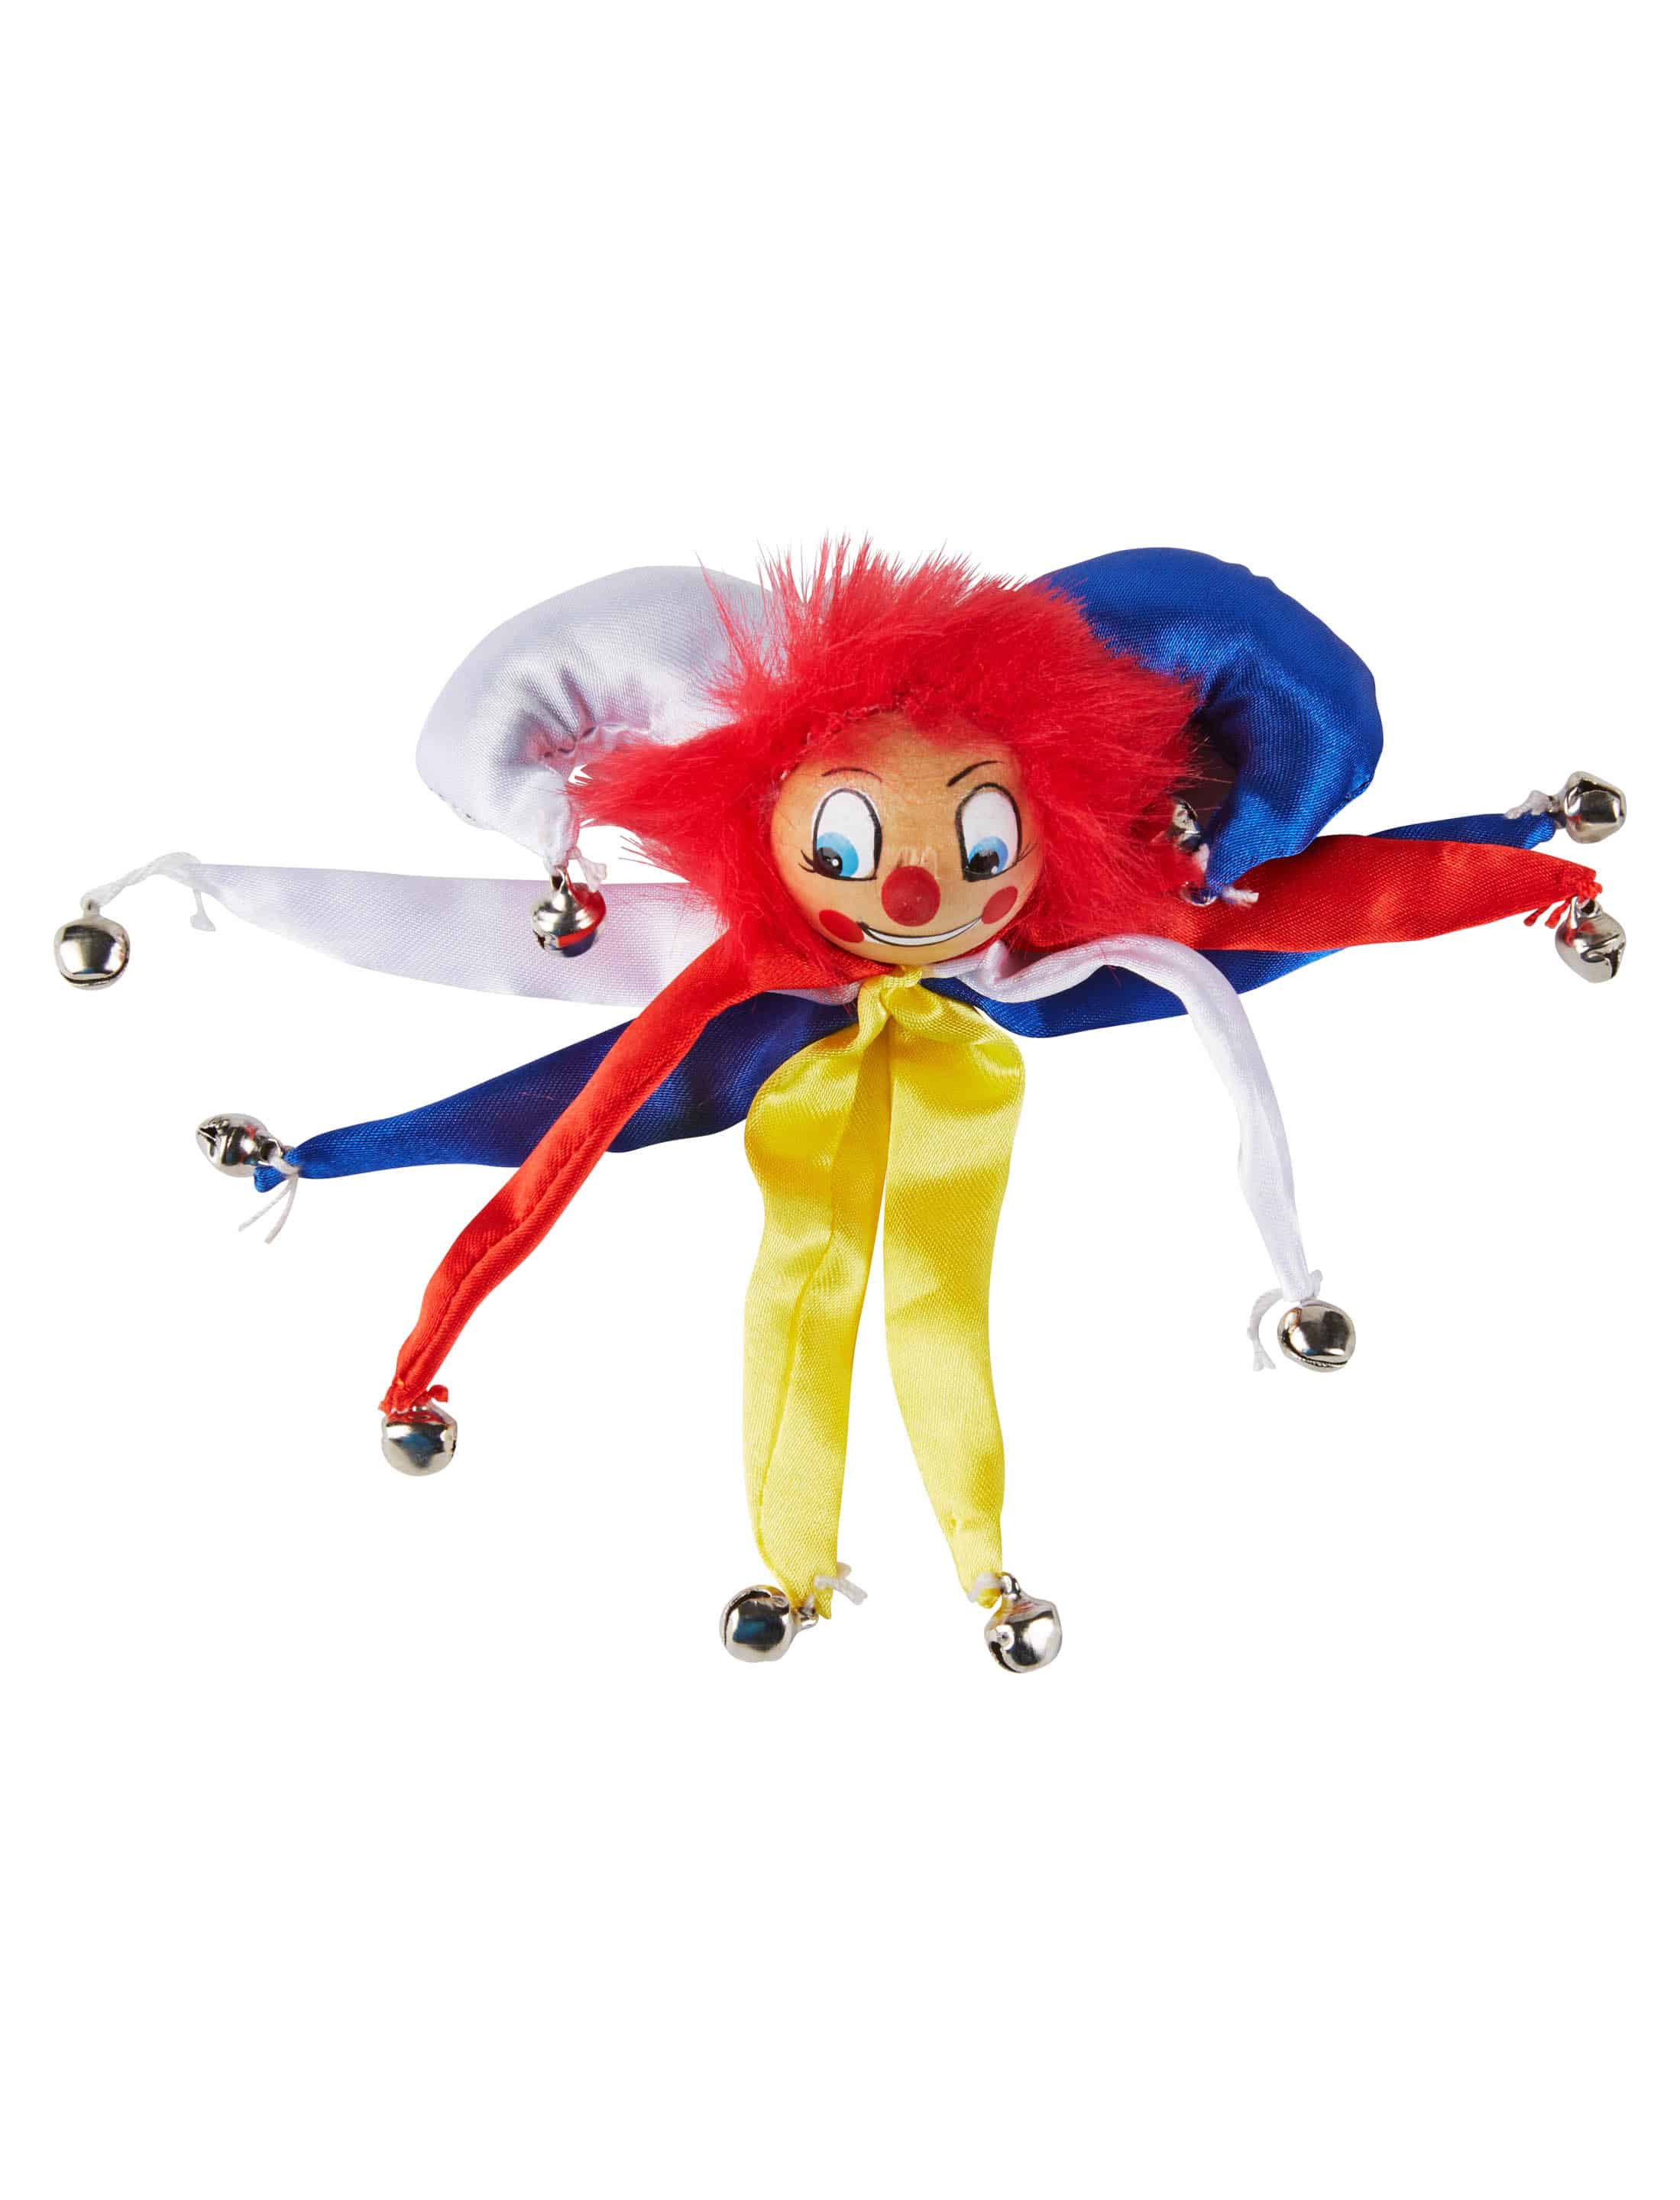 Anstecker Clown 11cm rot/weiß/blau